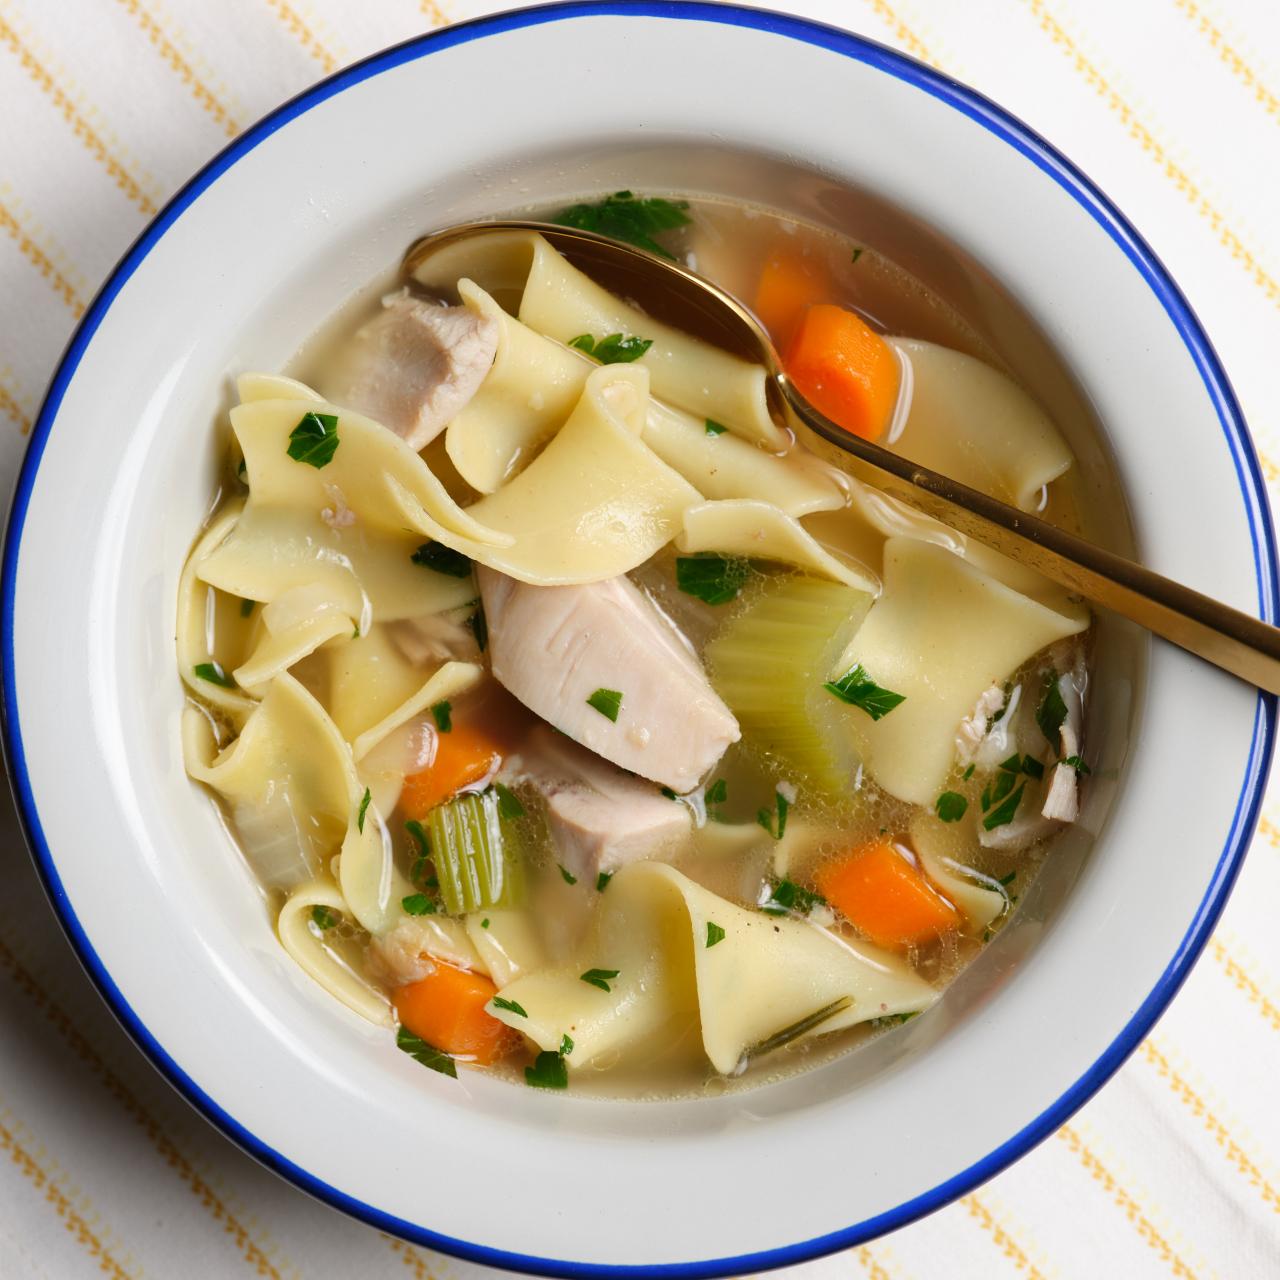 Chicken Noodle Soup Recipe, Ree Drummond